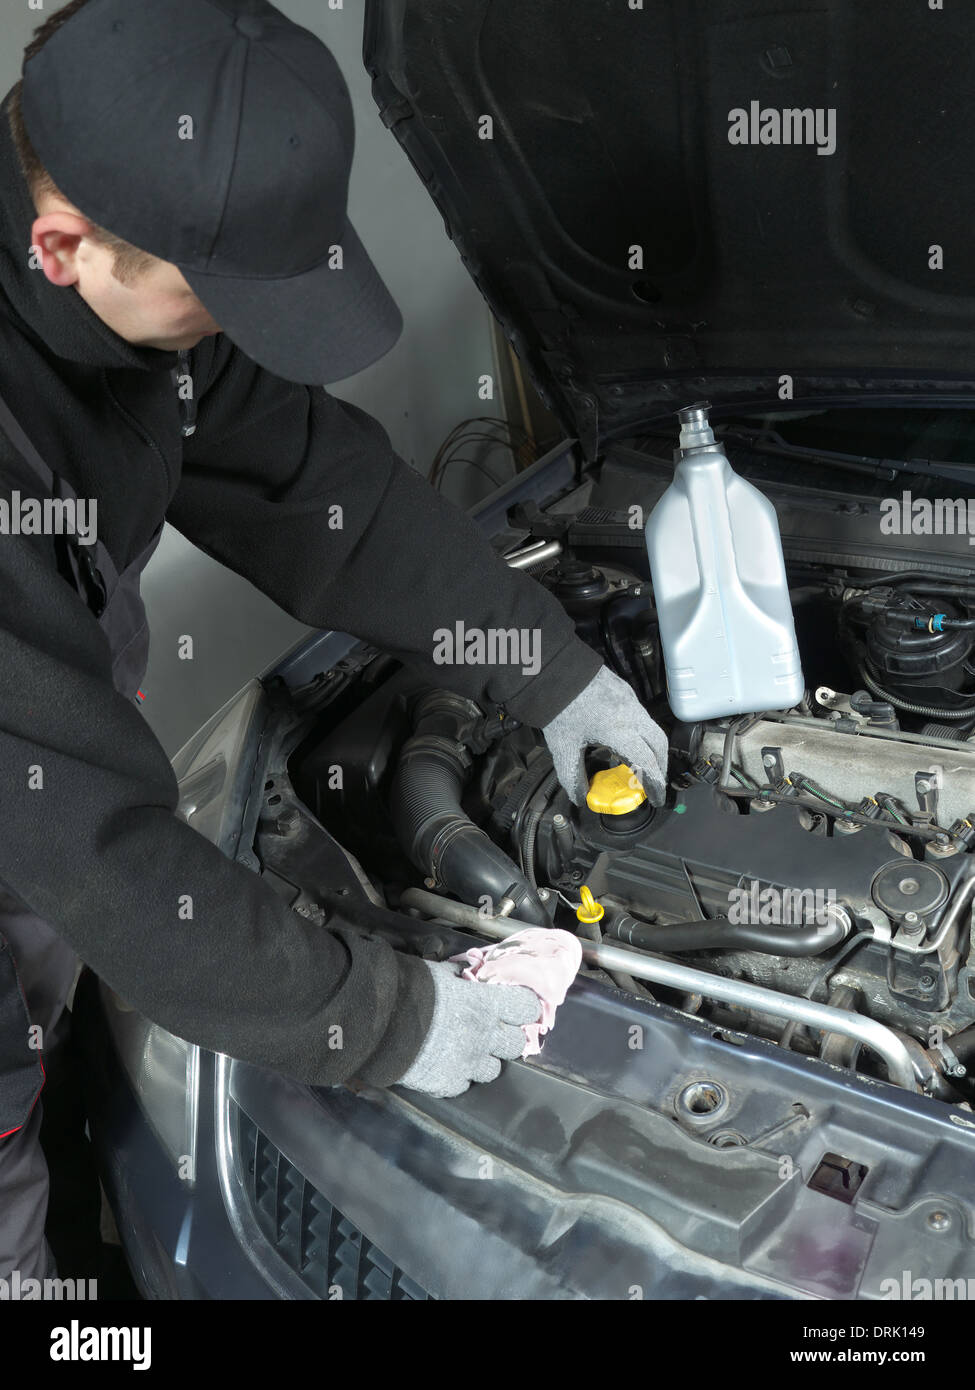 Auto mechanic unscrewing oil filler cap Stock Photo